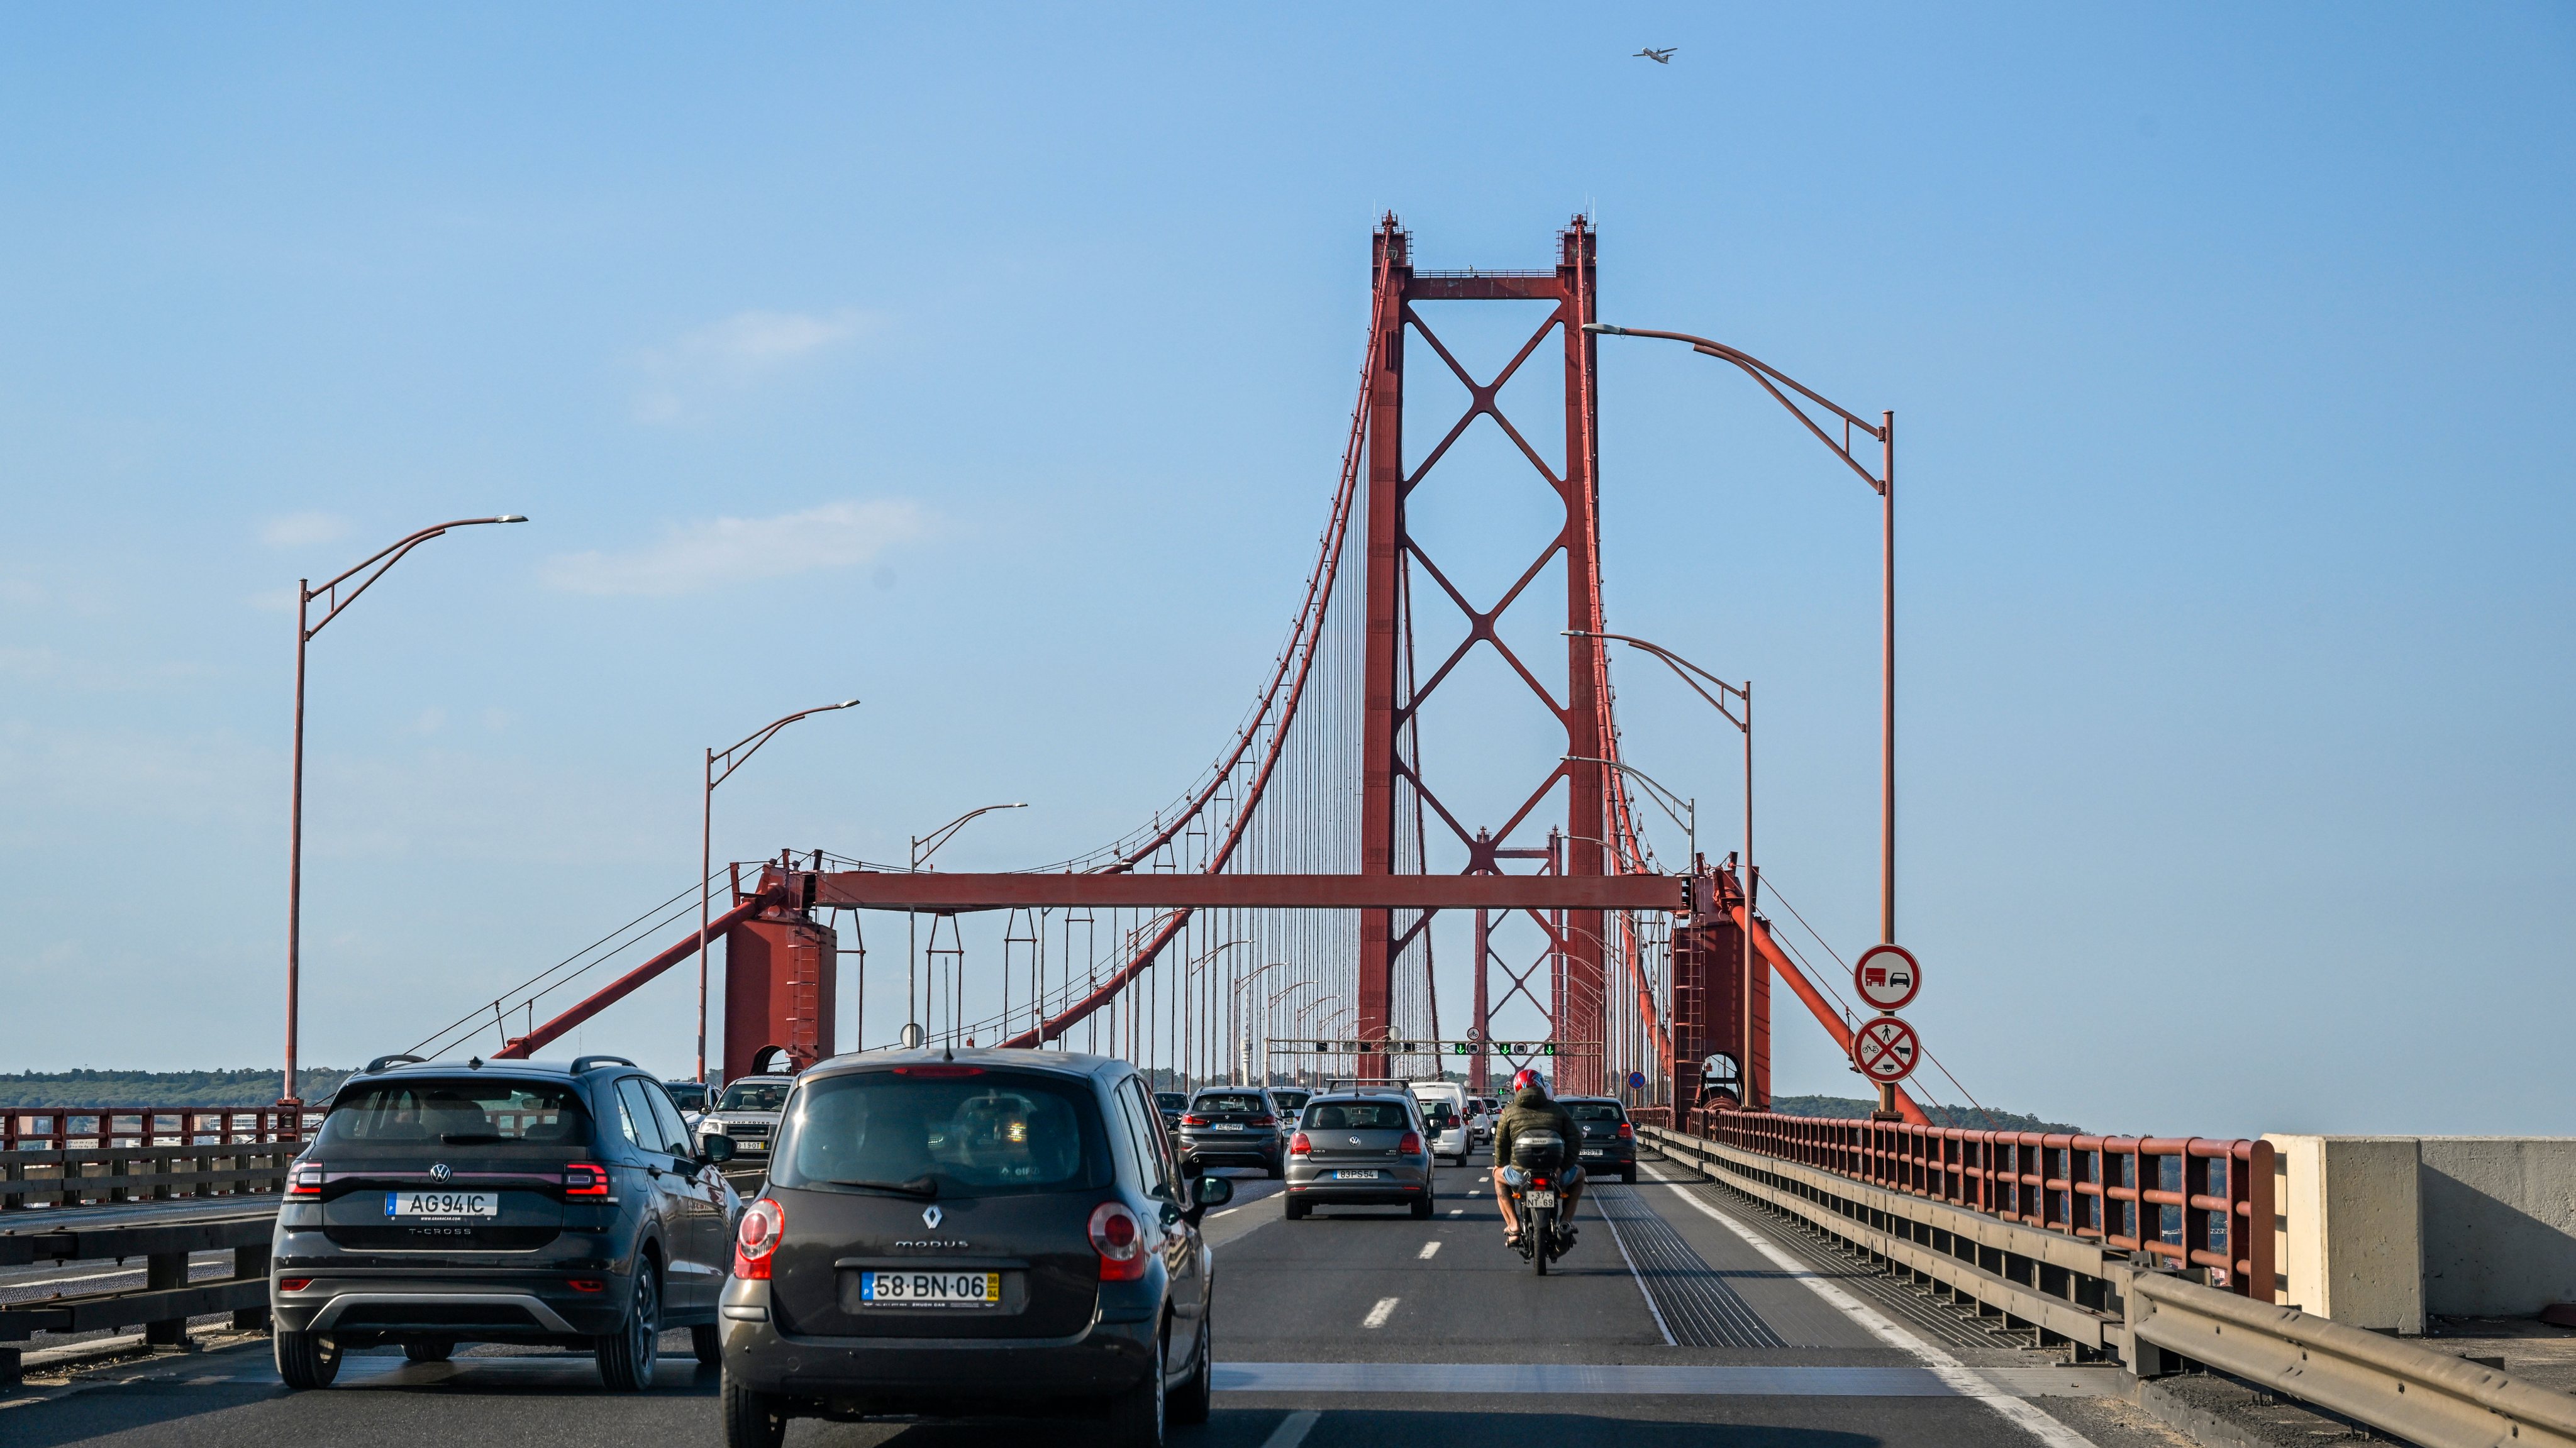 Heavy Traffic At 25 De Abril Bridge In Lisbon